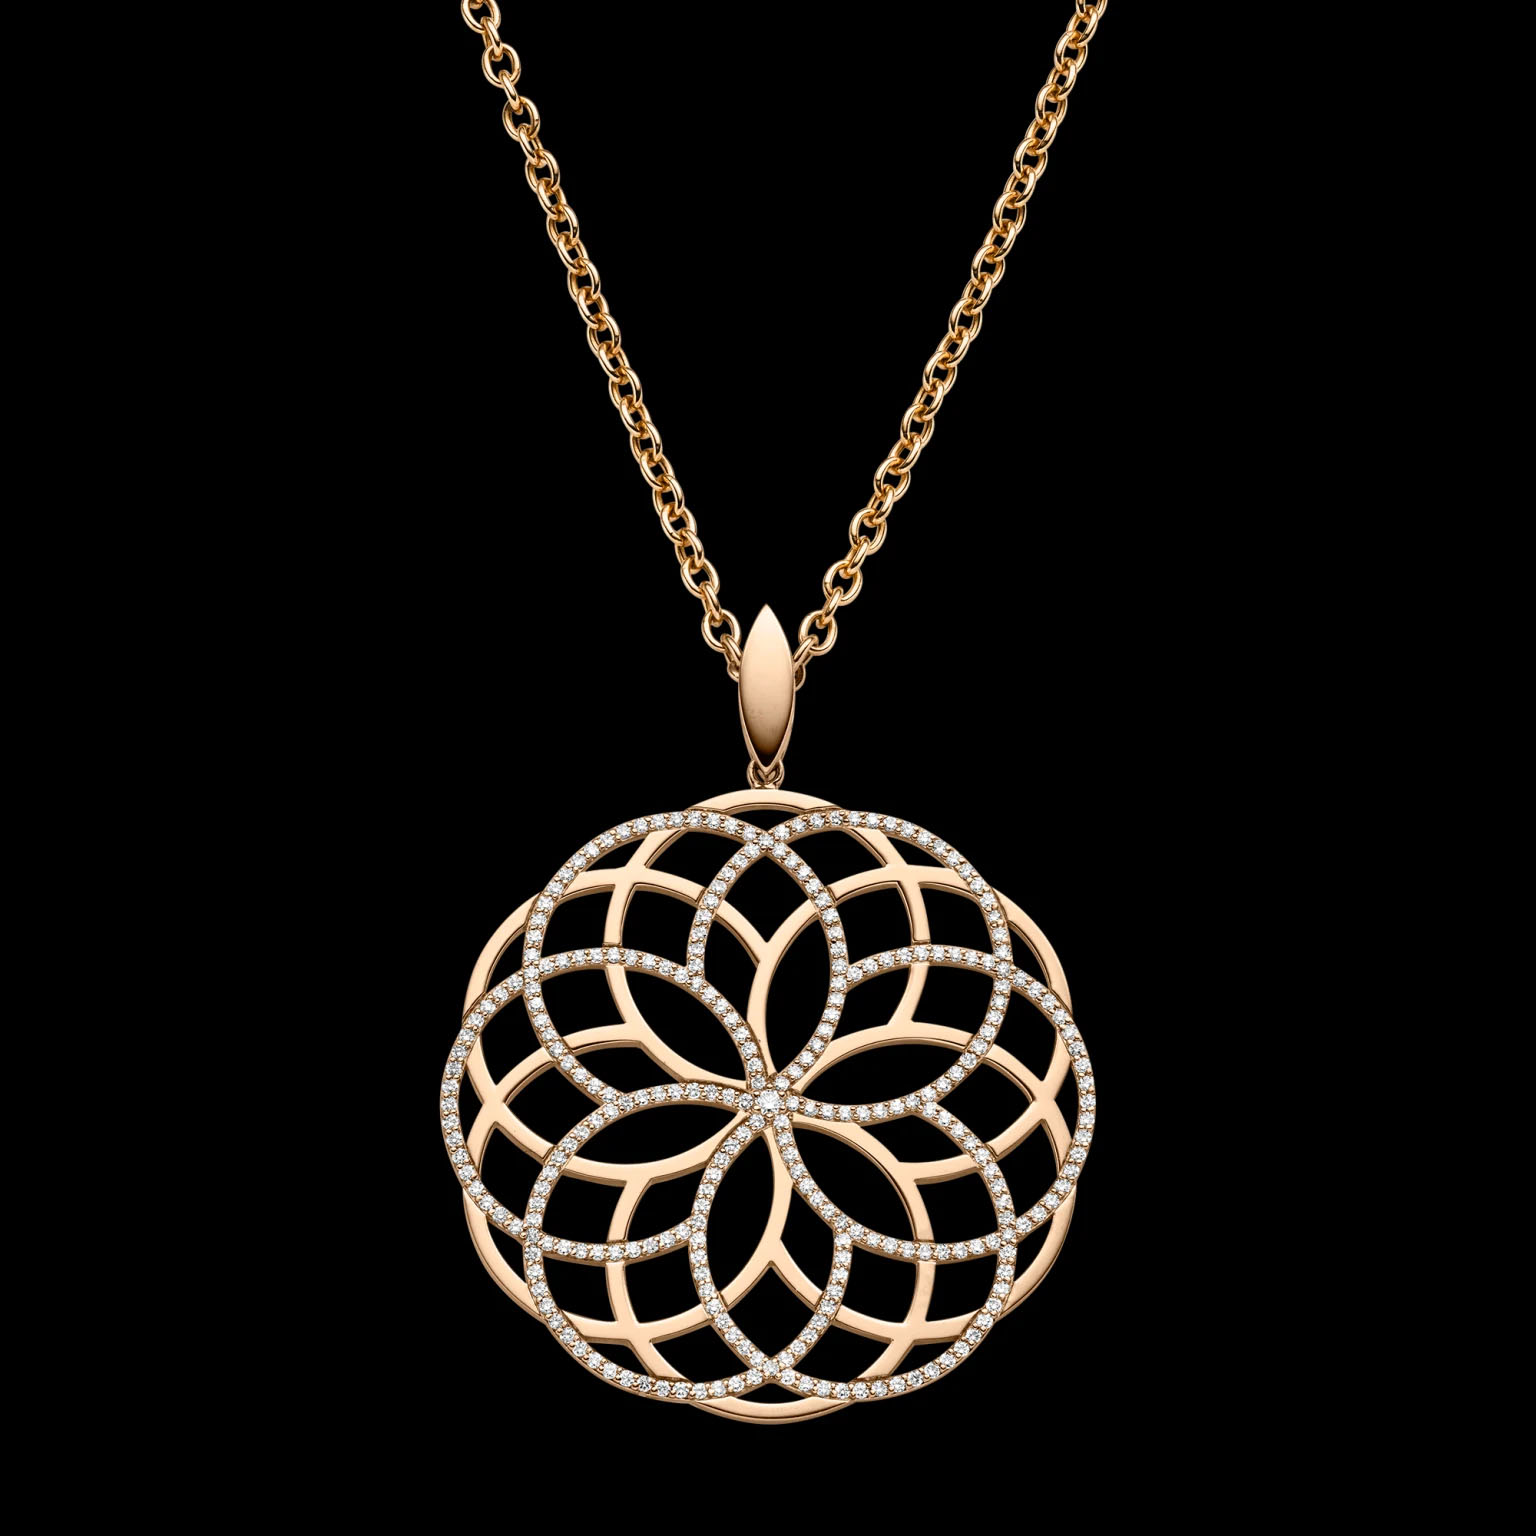 Wholesale customized choker necklace OEM/ODM Jewelry design your shape jewelry